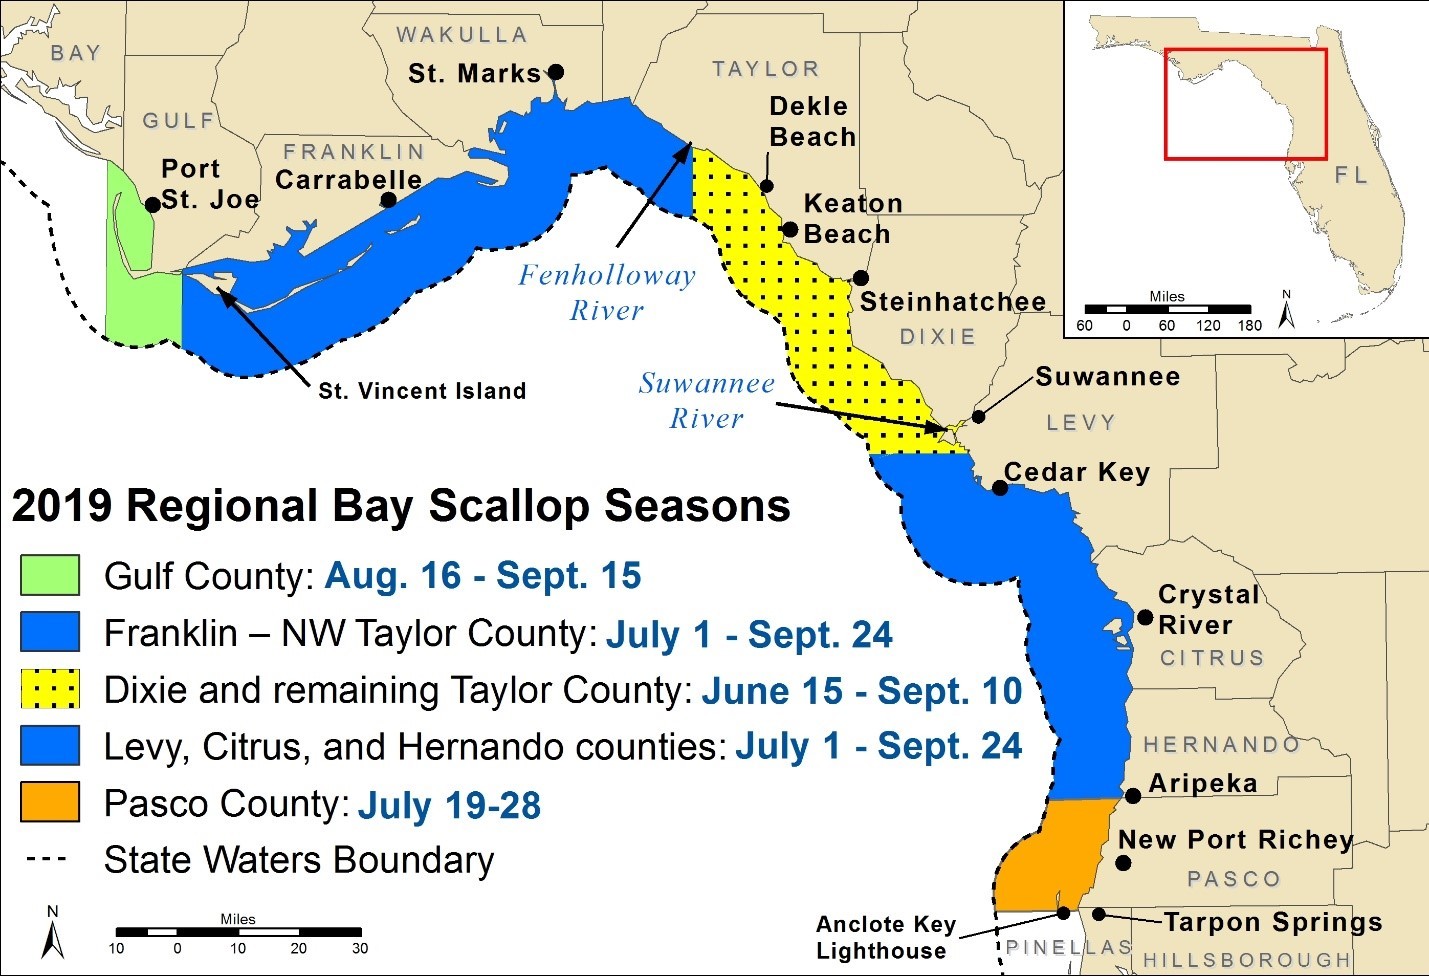 2019 Regional Bay Scallop Seasons